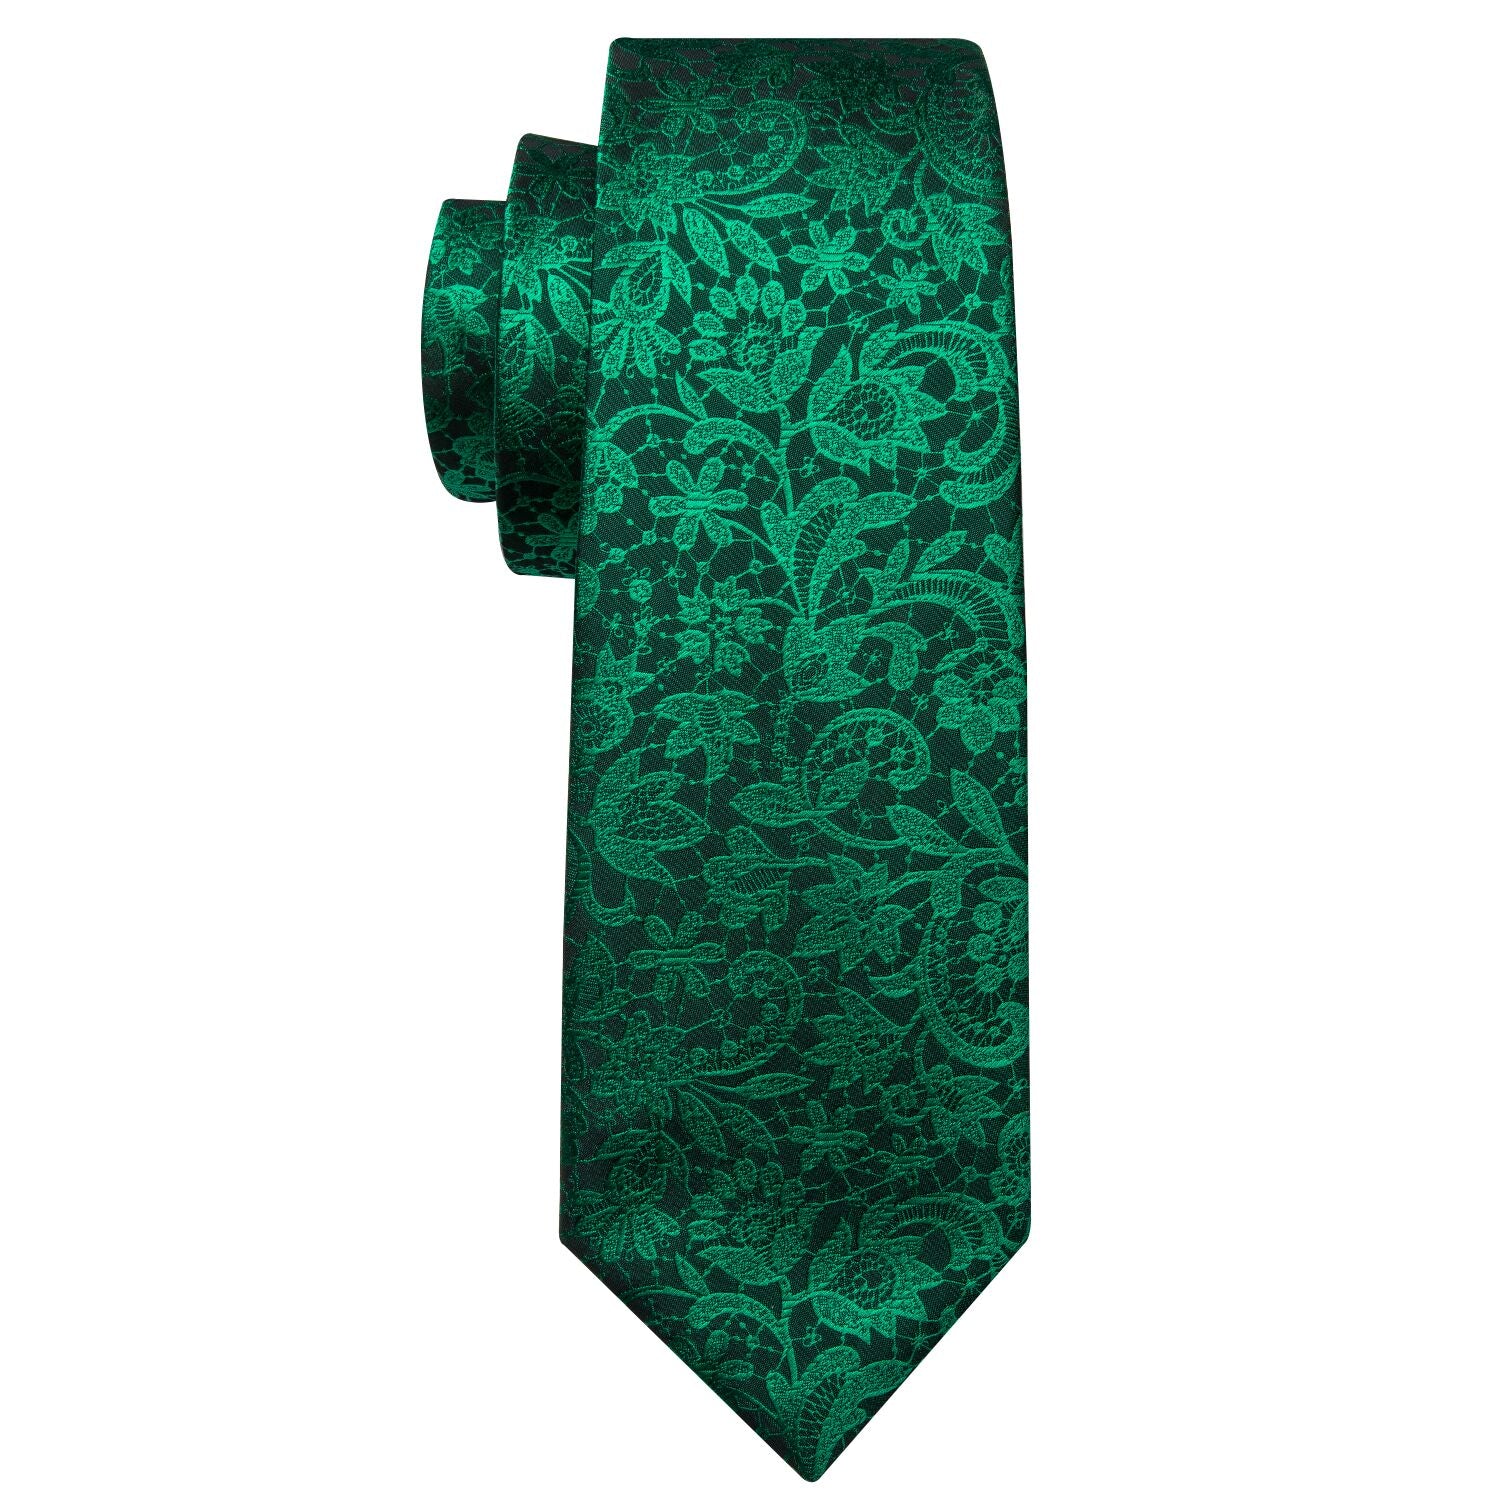 Barry Wang Floral Tie Fluorescent Green Paisley Silk Tie Hanky Cufflinks Set